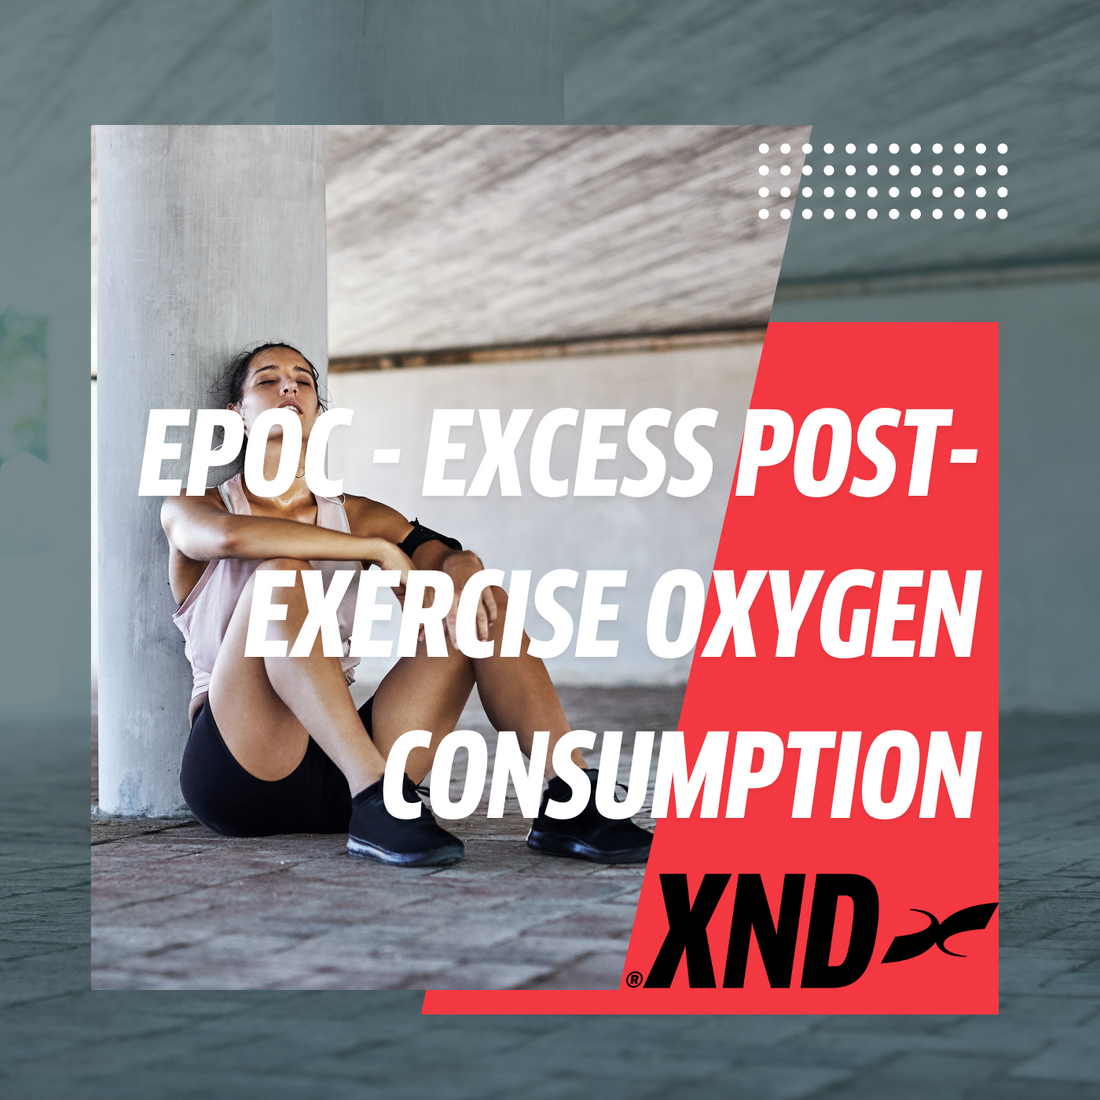 EPOC - Excess post-exercise oxygen consumption